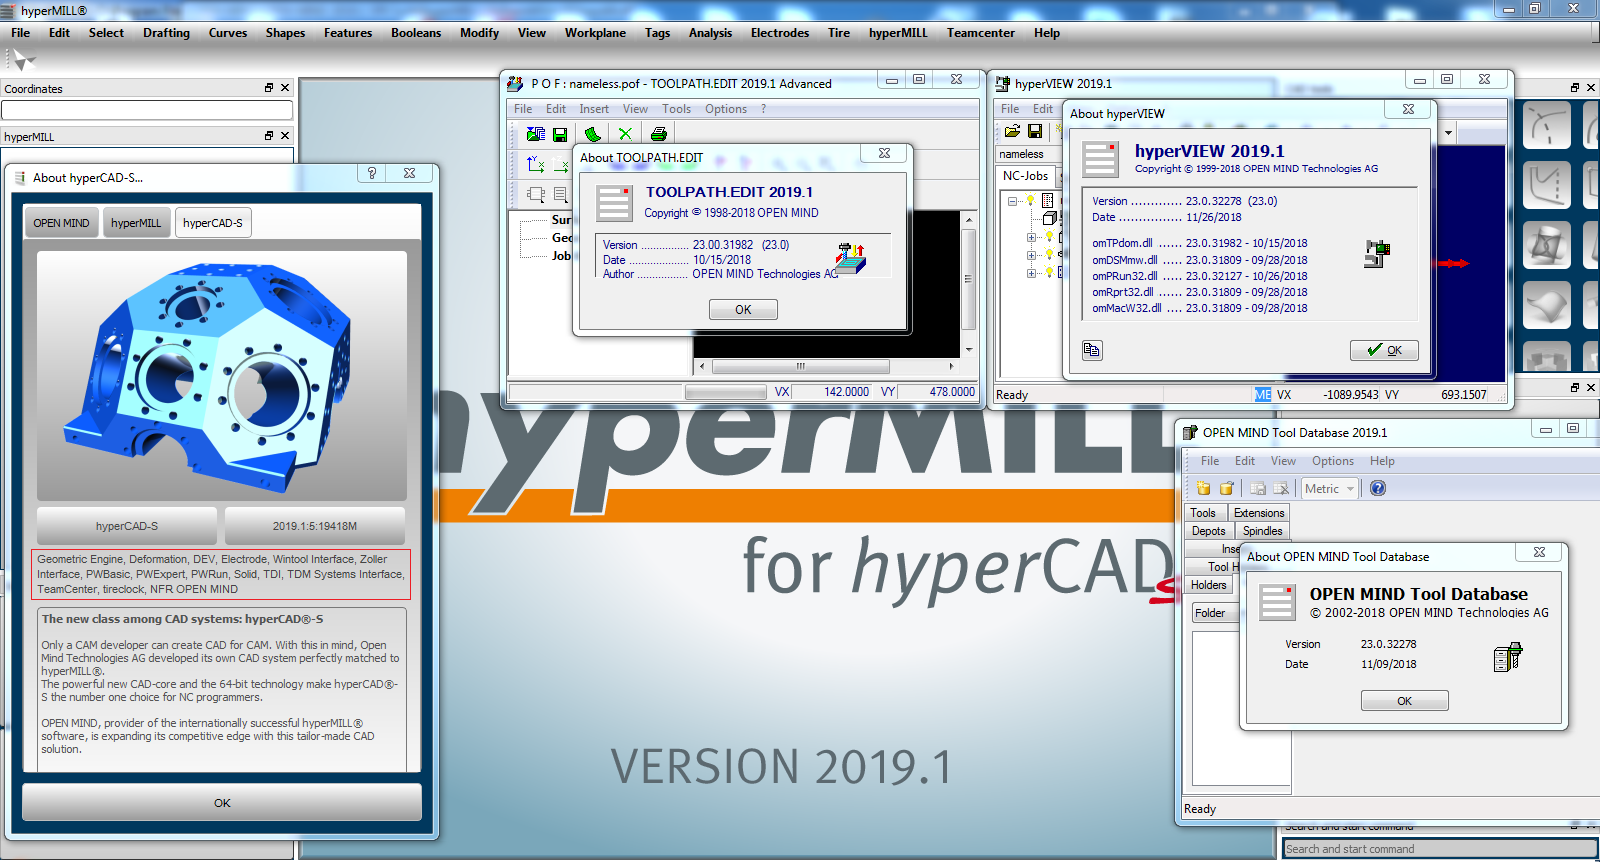 Open Mind Hypermill Download.torrent